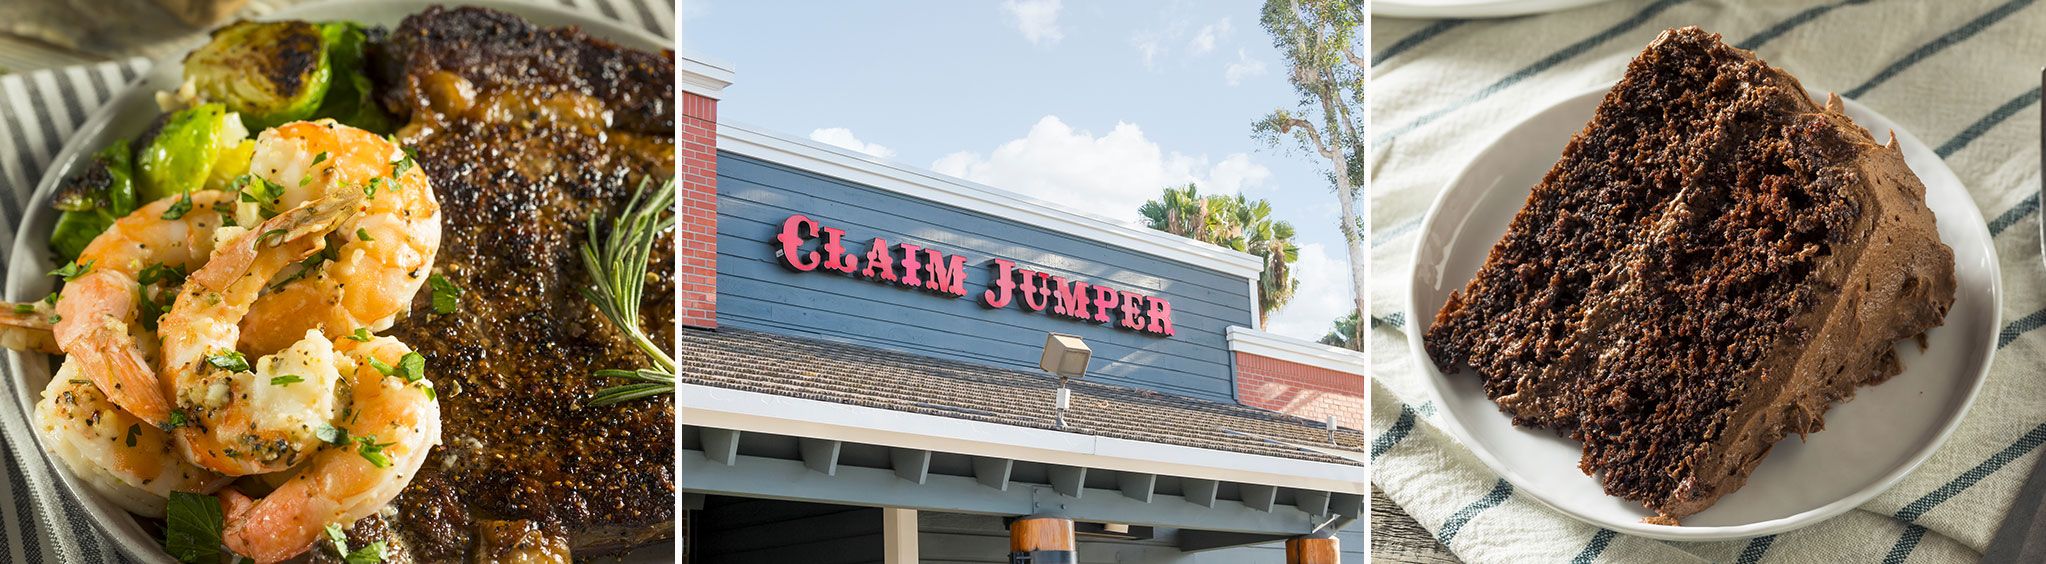 Claim Jumper Restaurant at Opry Mills